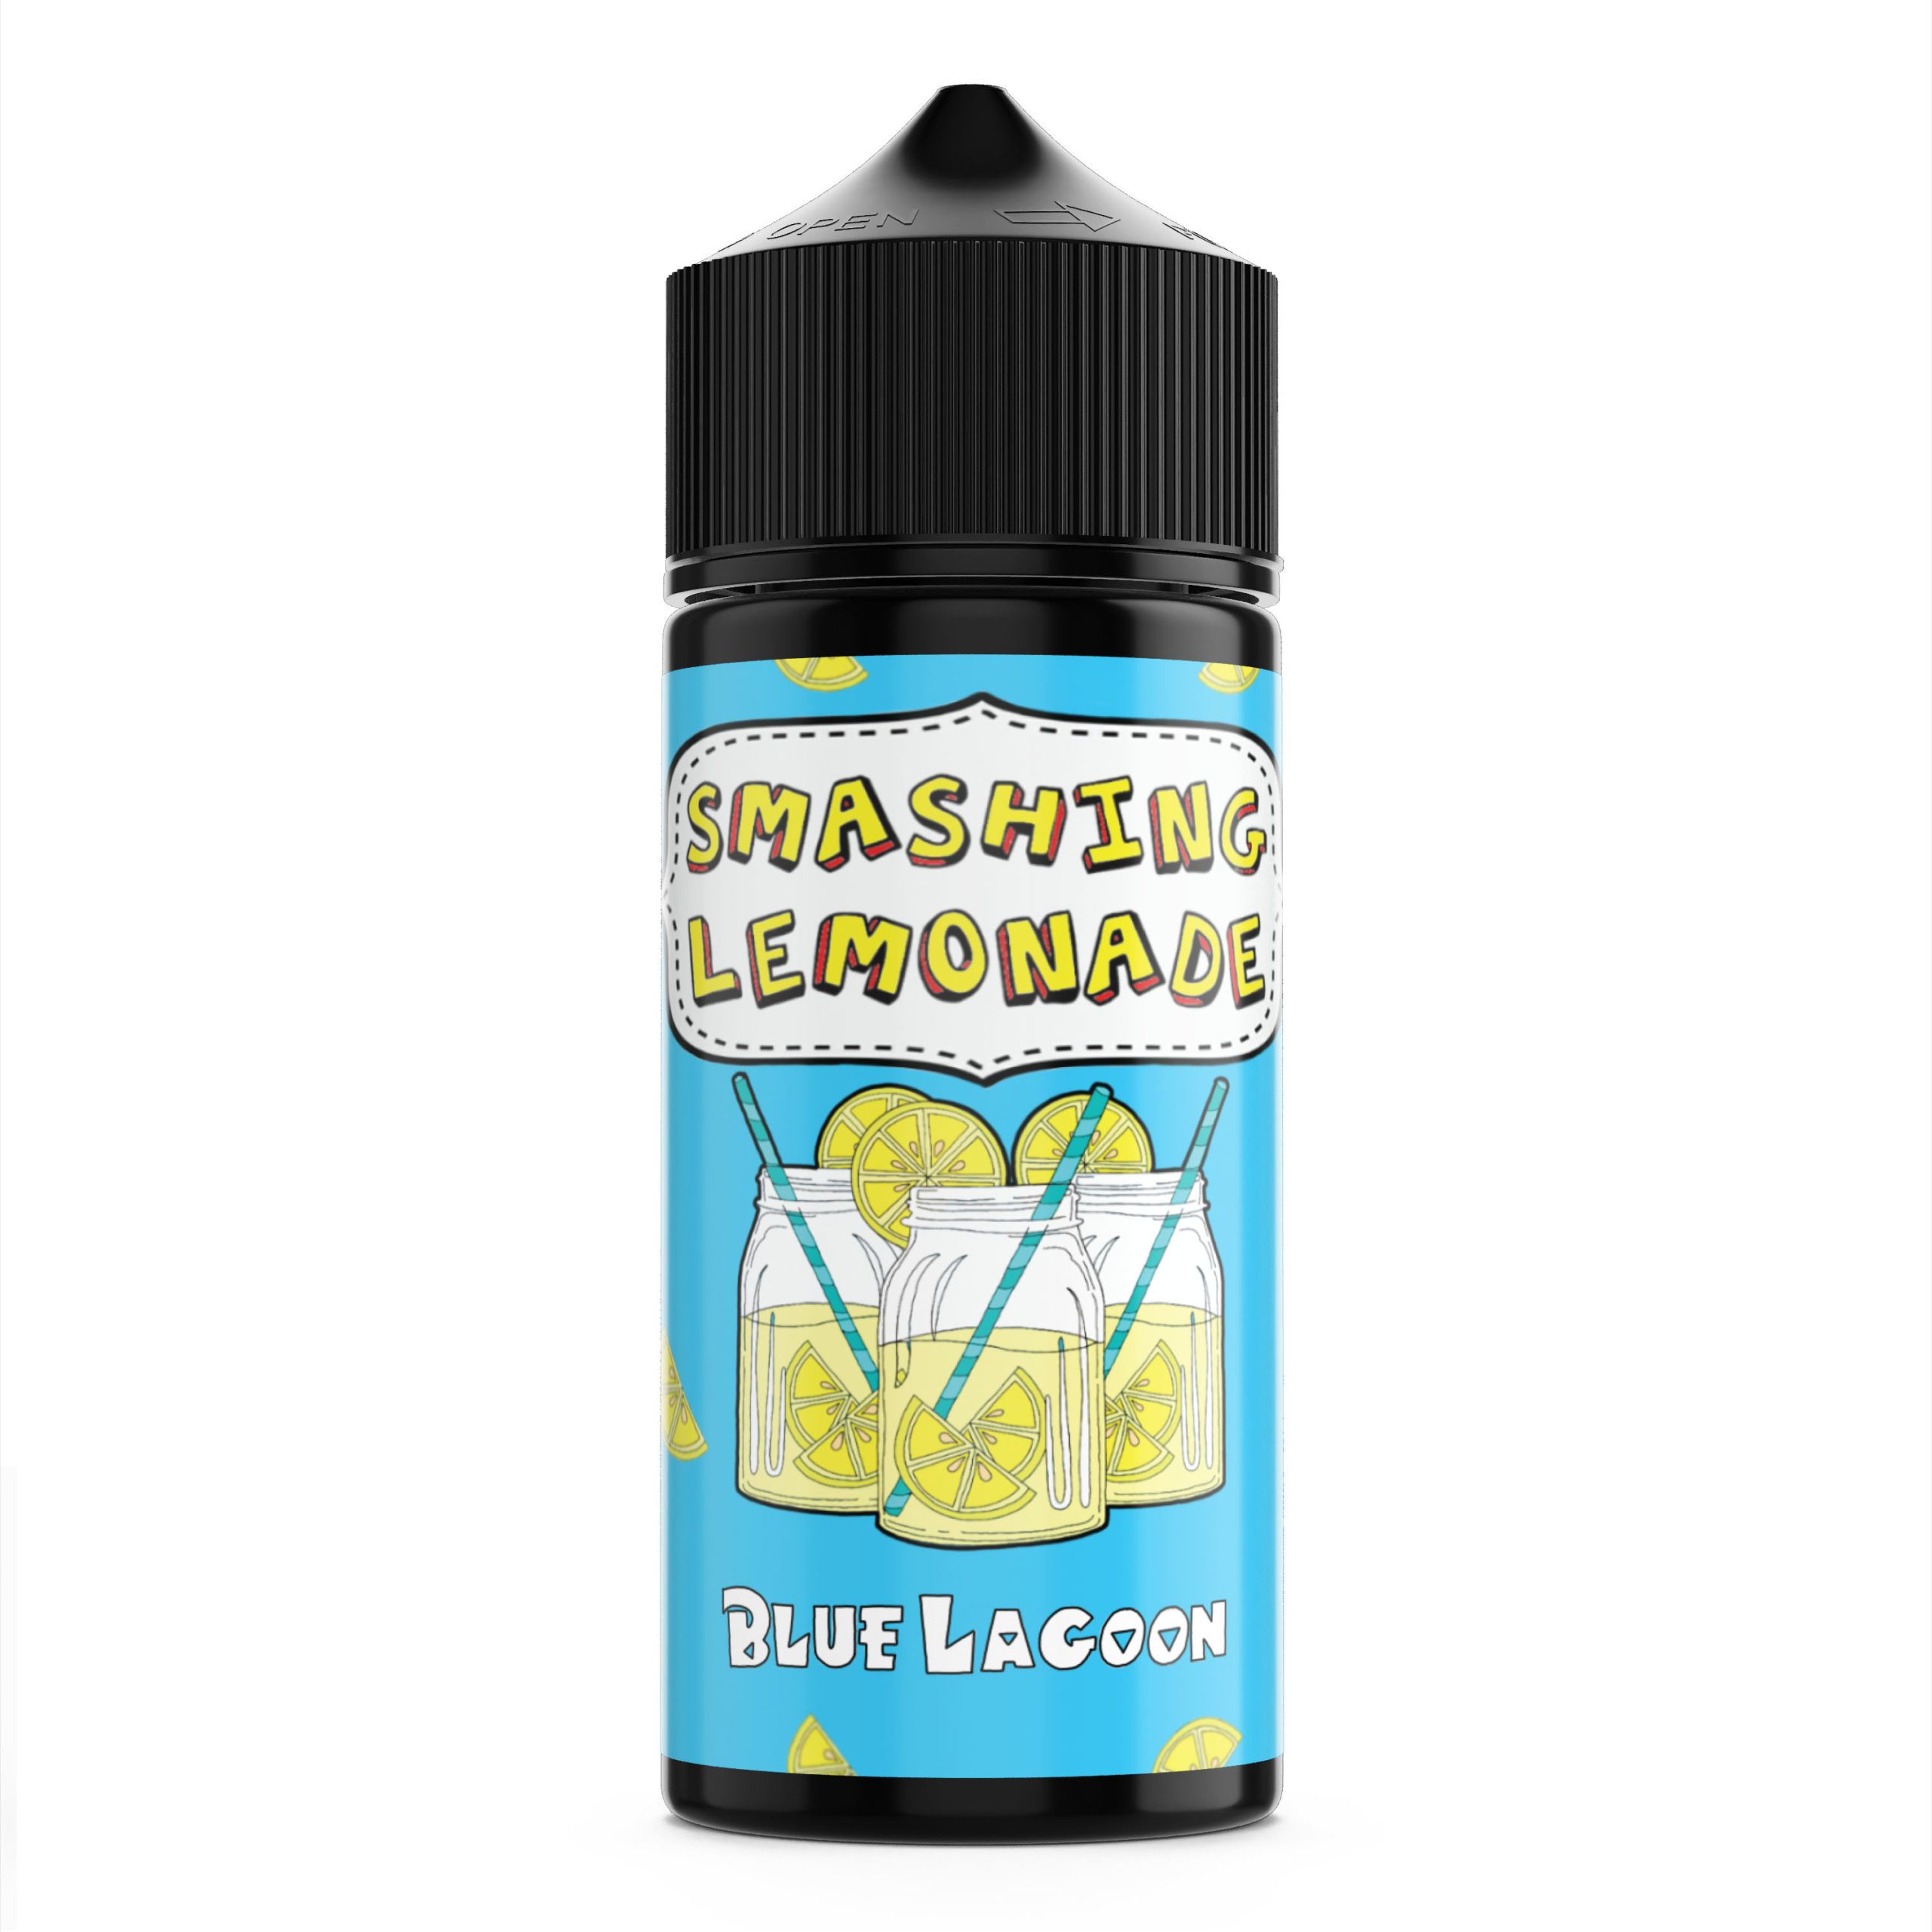 images/virtuemart/product/Blue Lagoon - Smashing Lemonade (100ml).jpg